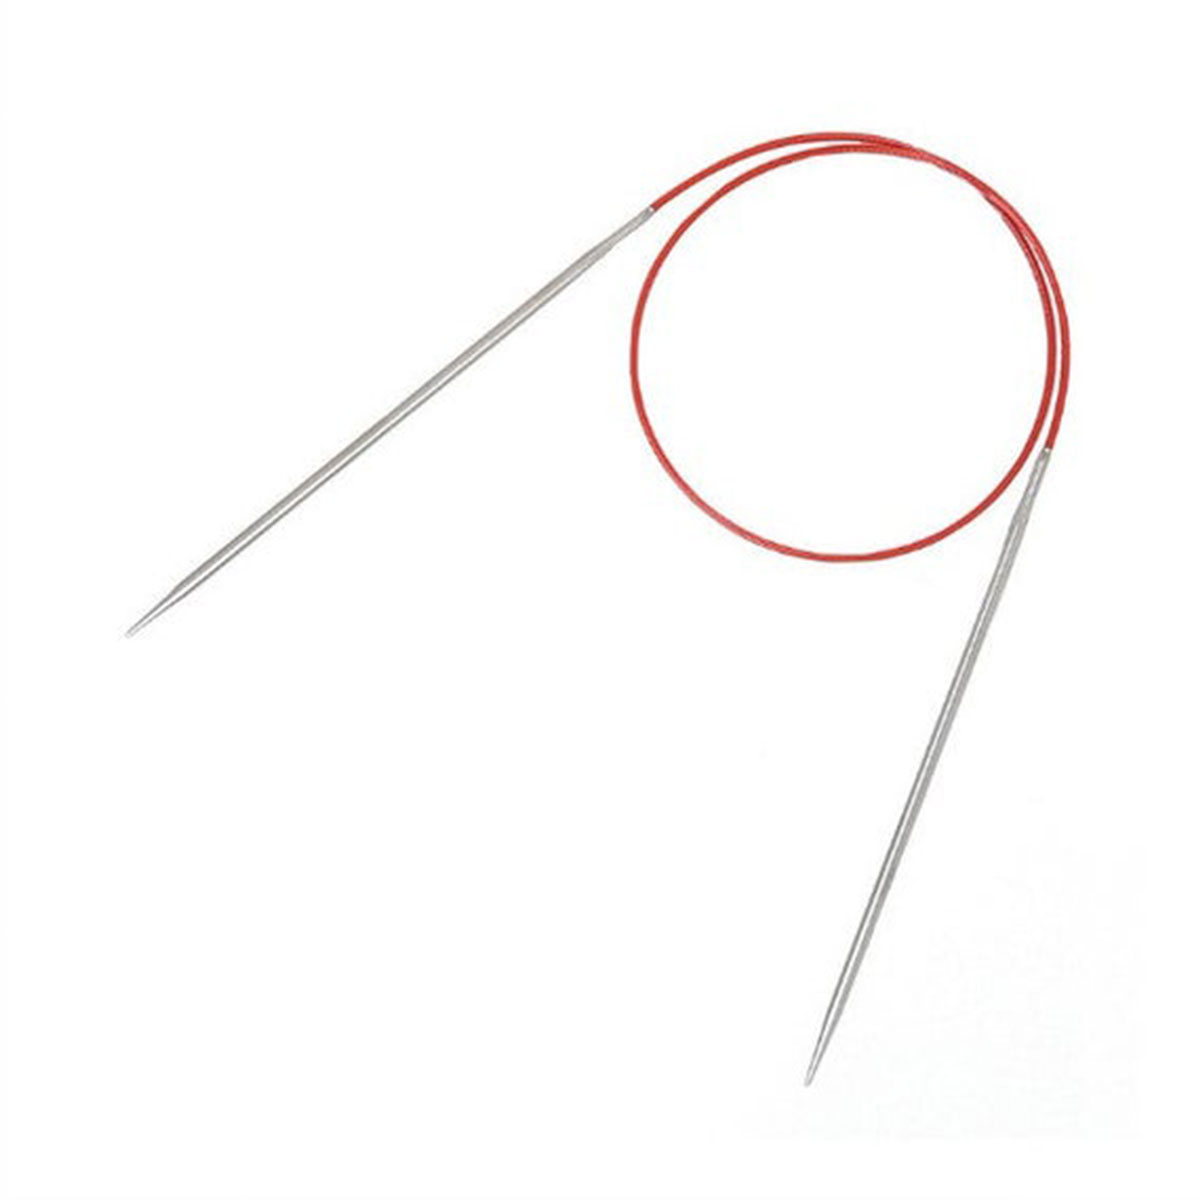 ChiaoGoo RED Lace Circular Needles - US 7 (4.50mm) - 16 Needles Video  Reviews at Jimmy Beans Wool